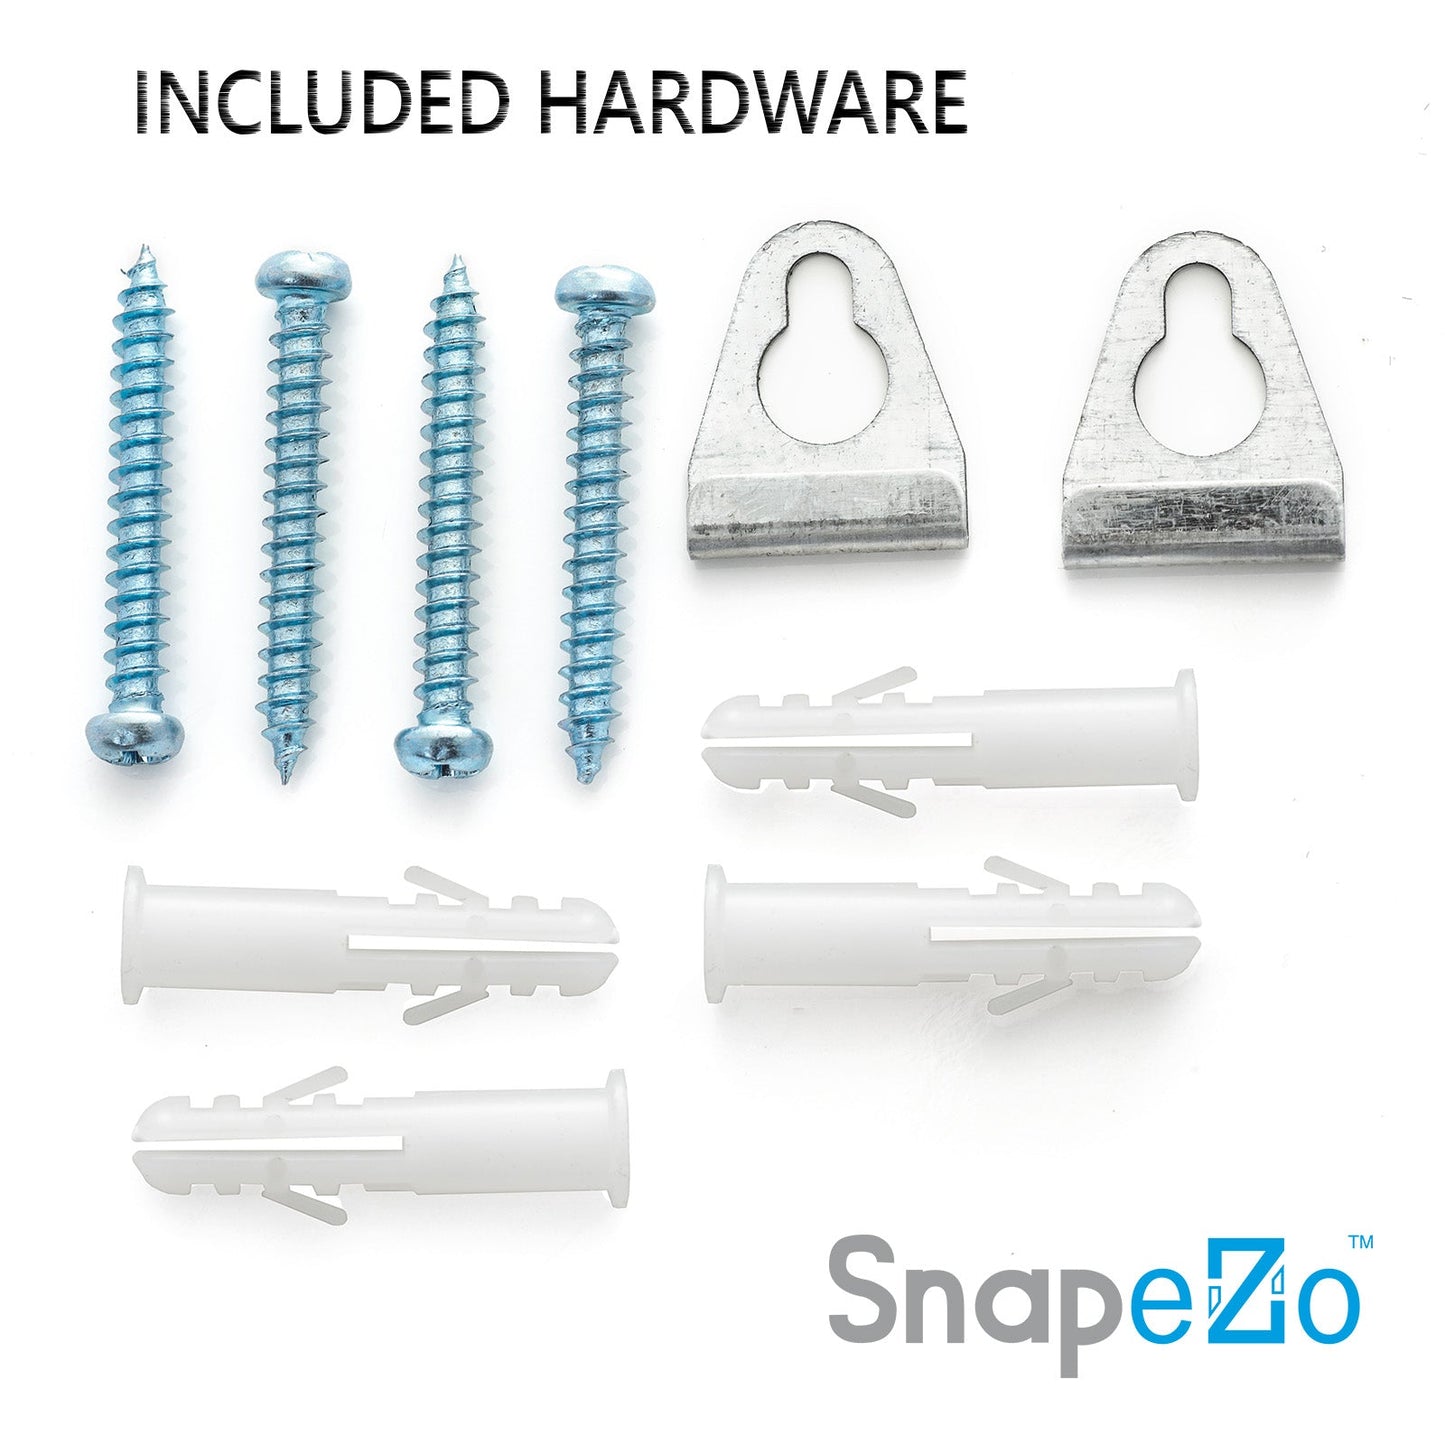 25x40 Silver SnapeZo® Snap Frame - 1.2" Profile